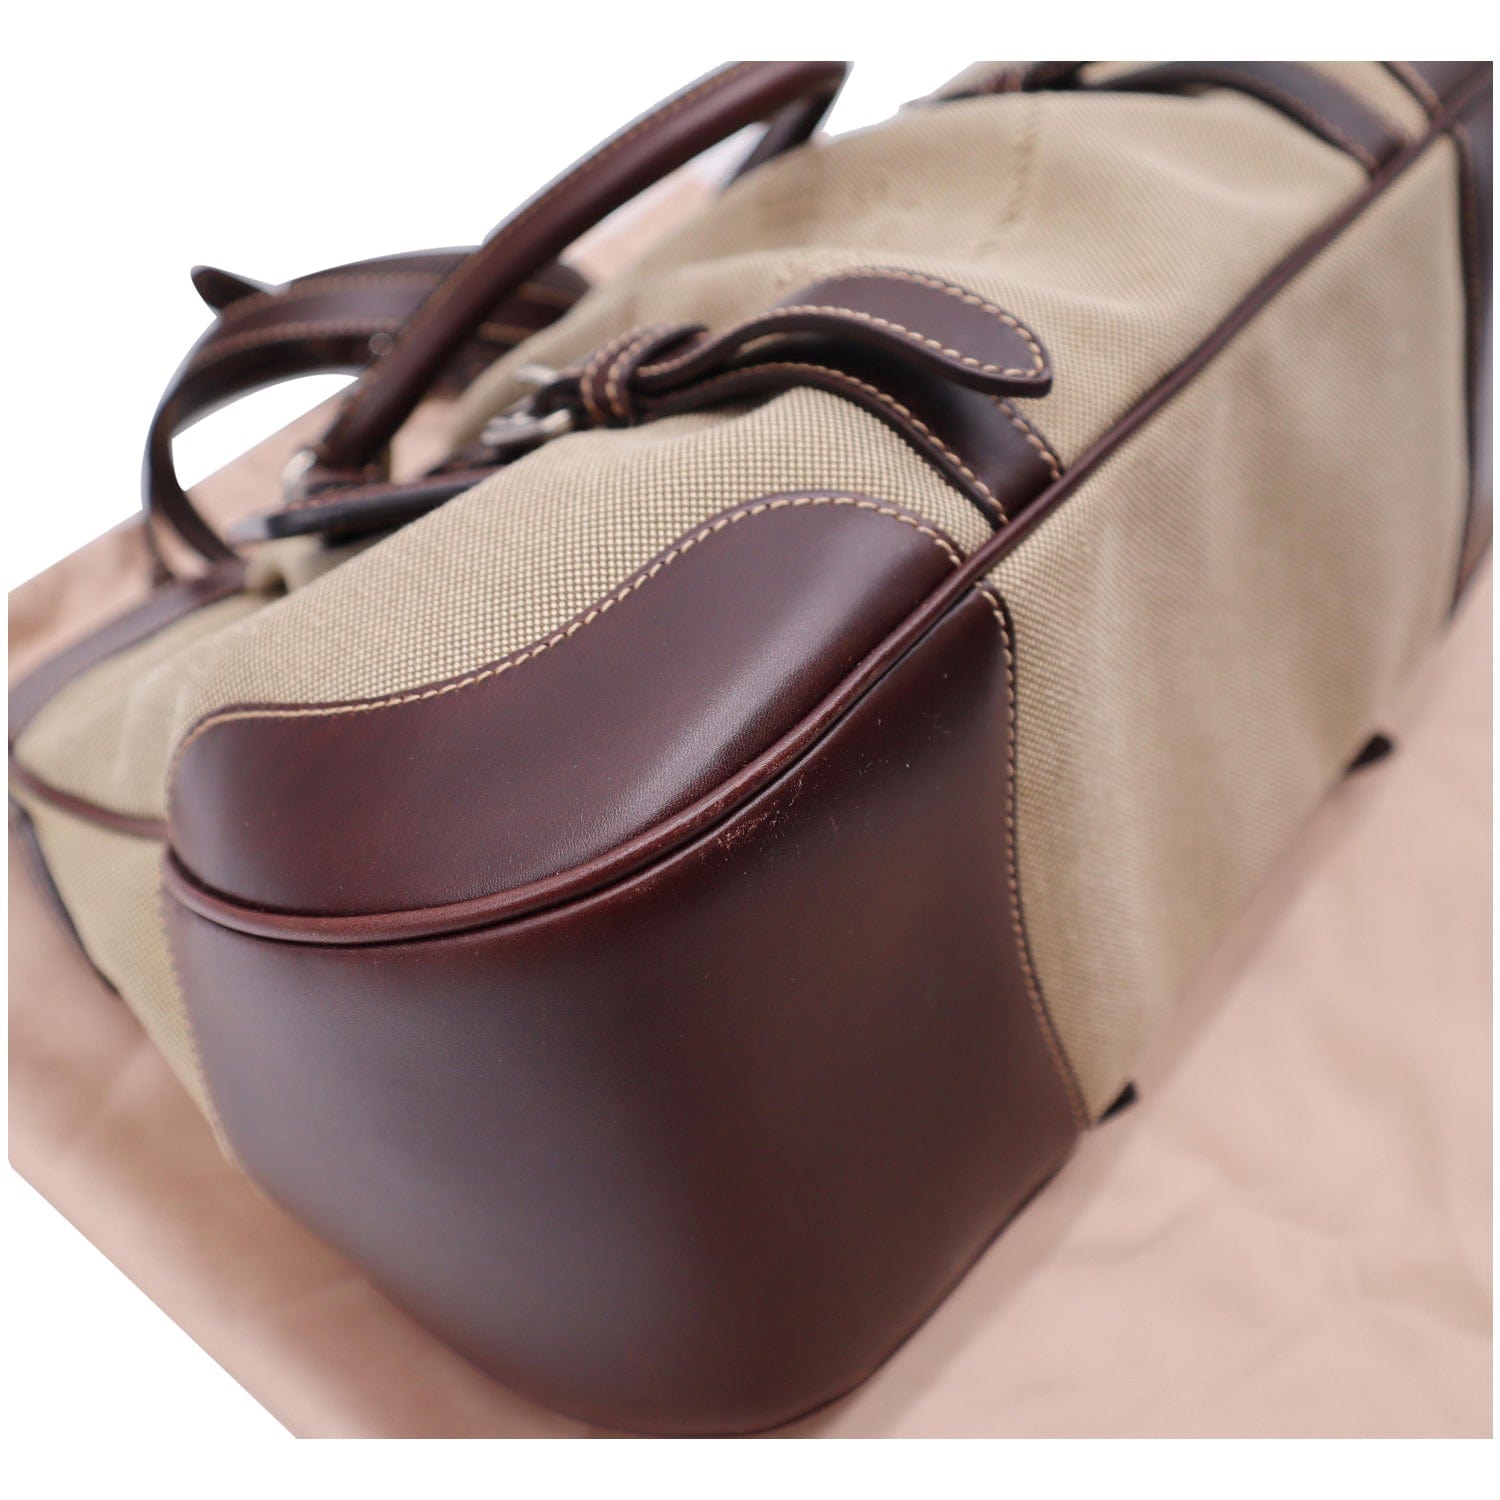 Prada Authenticated Leather Clutch Bag